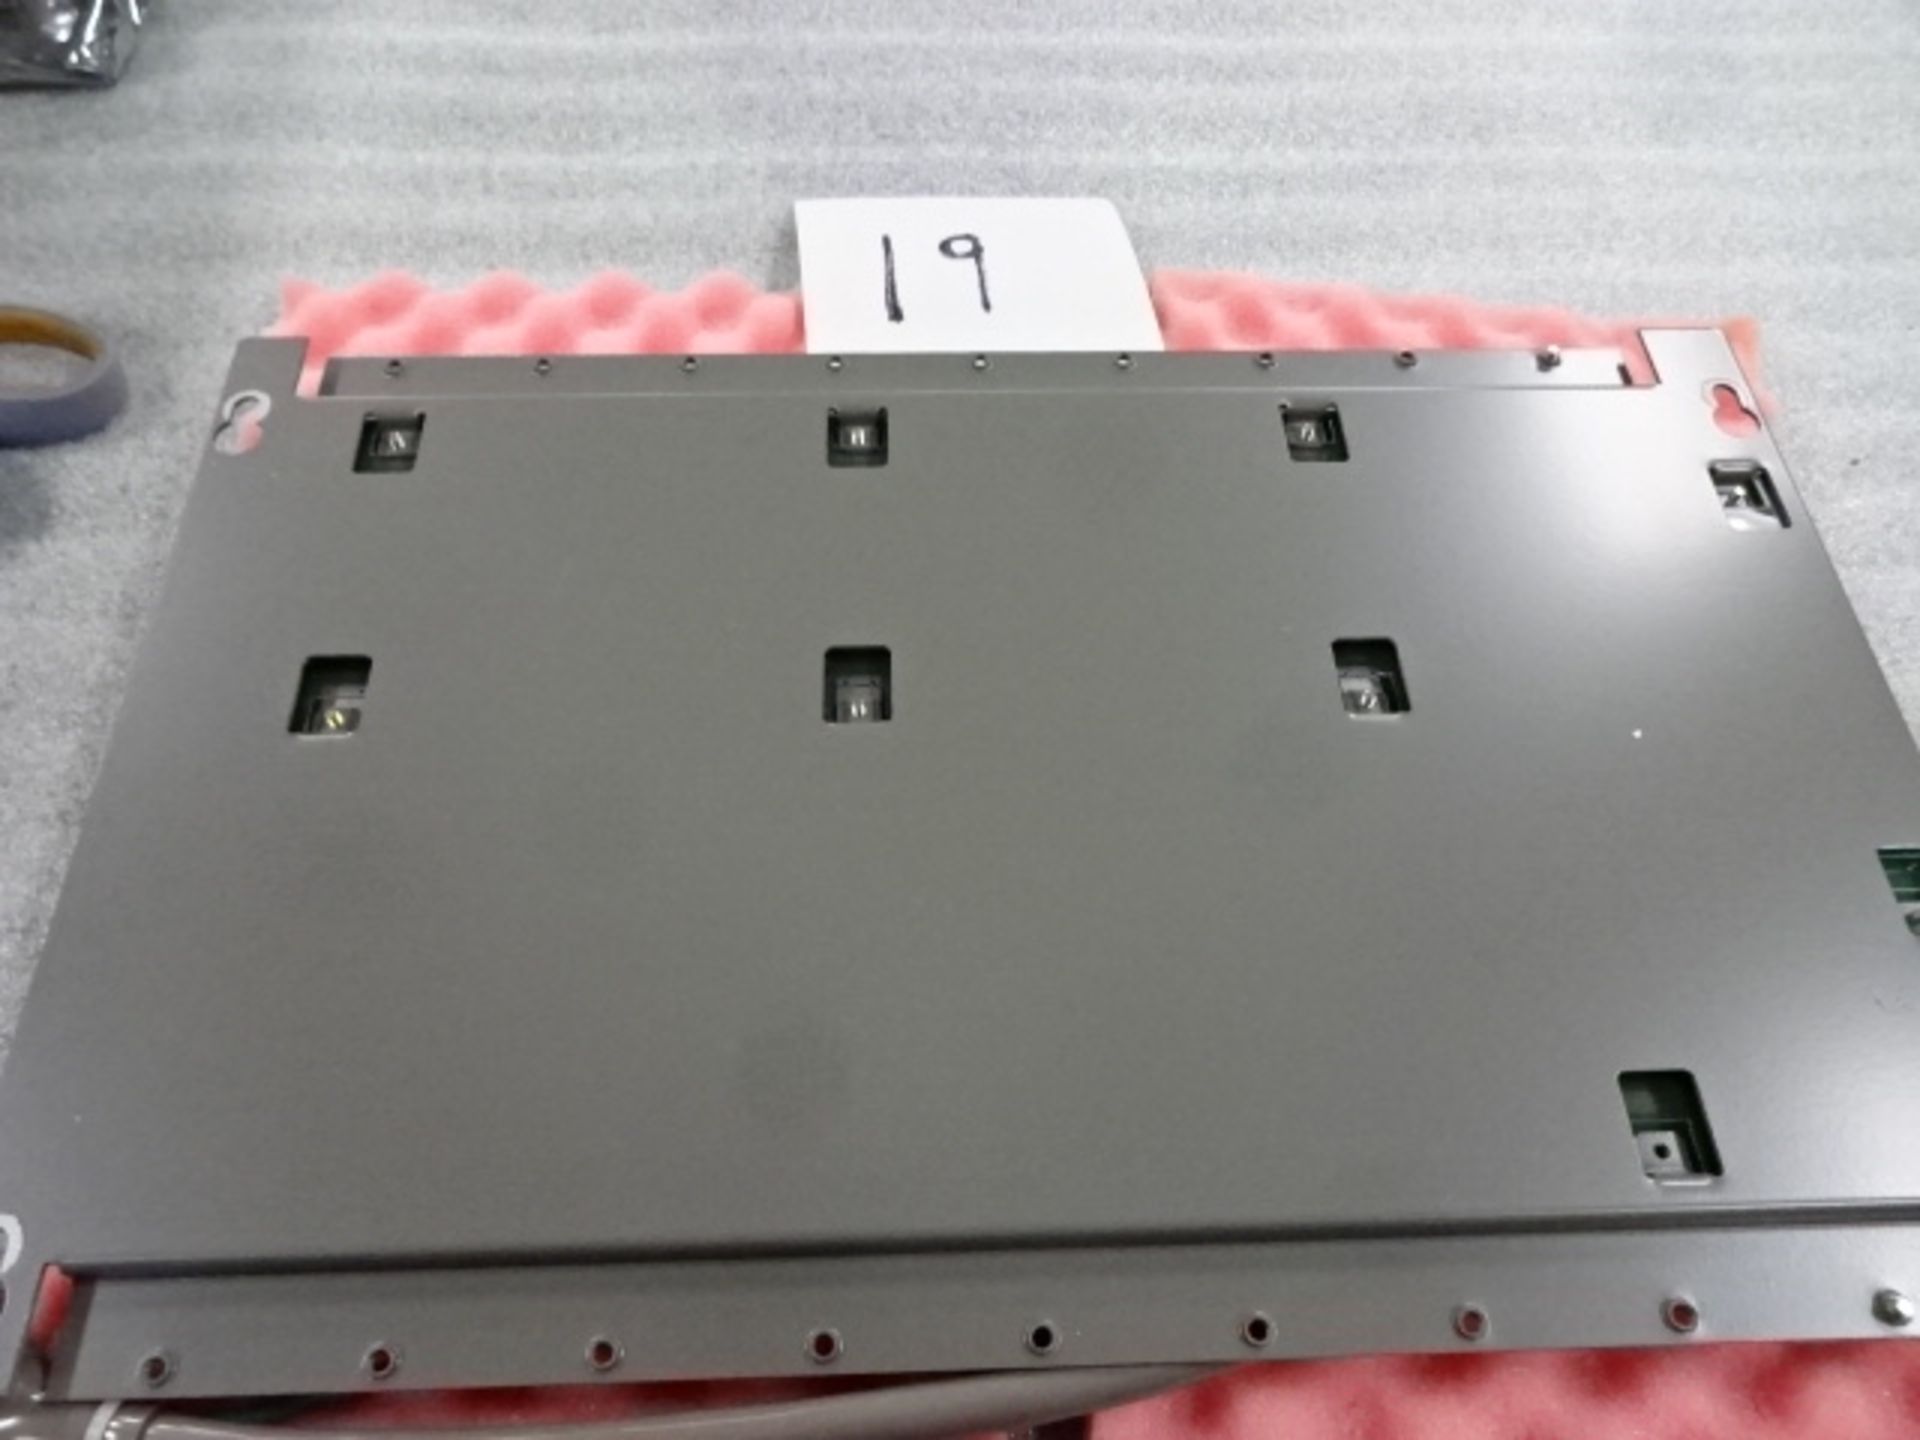 Circuit Imprimé - Electronic Board - Image 4 of 4